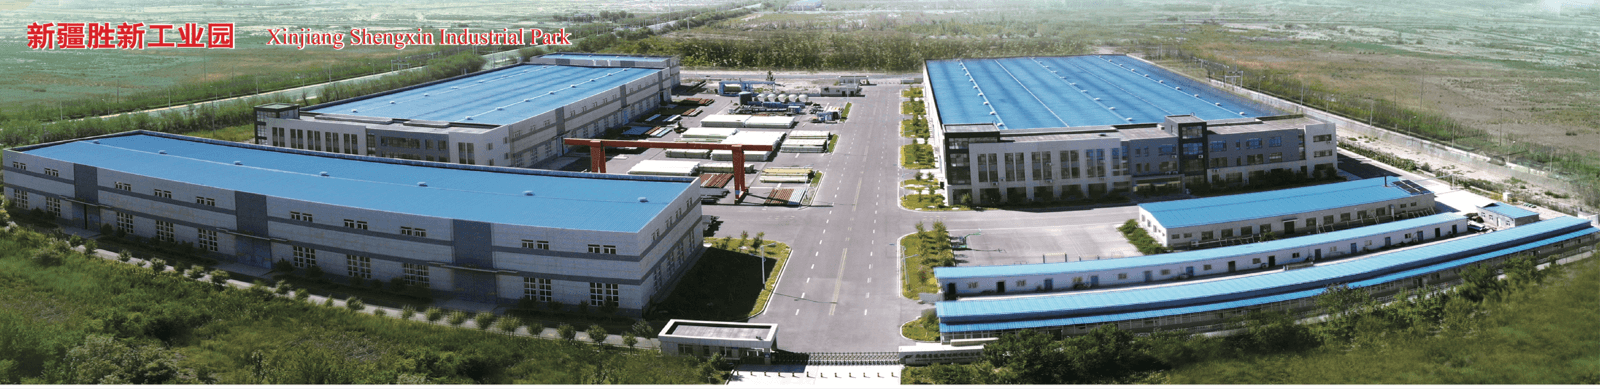 Xinjiang Industrial Park